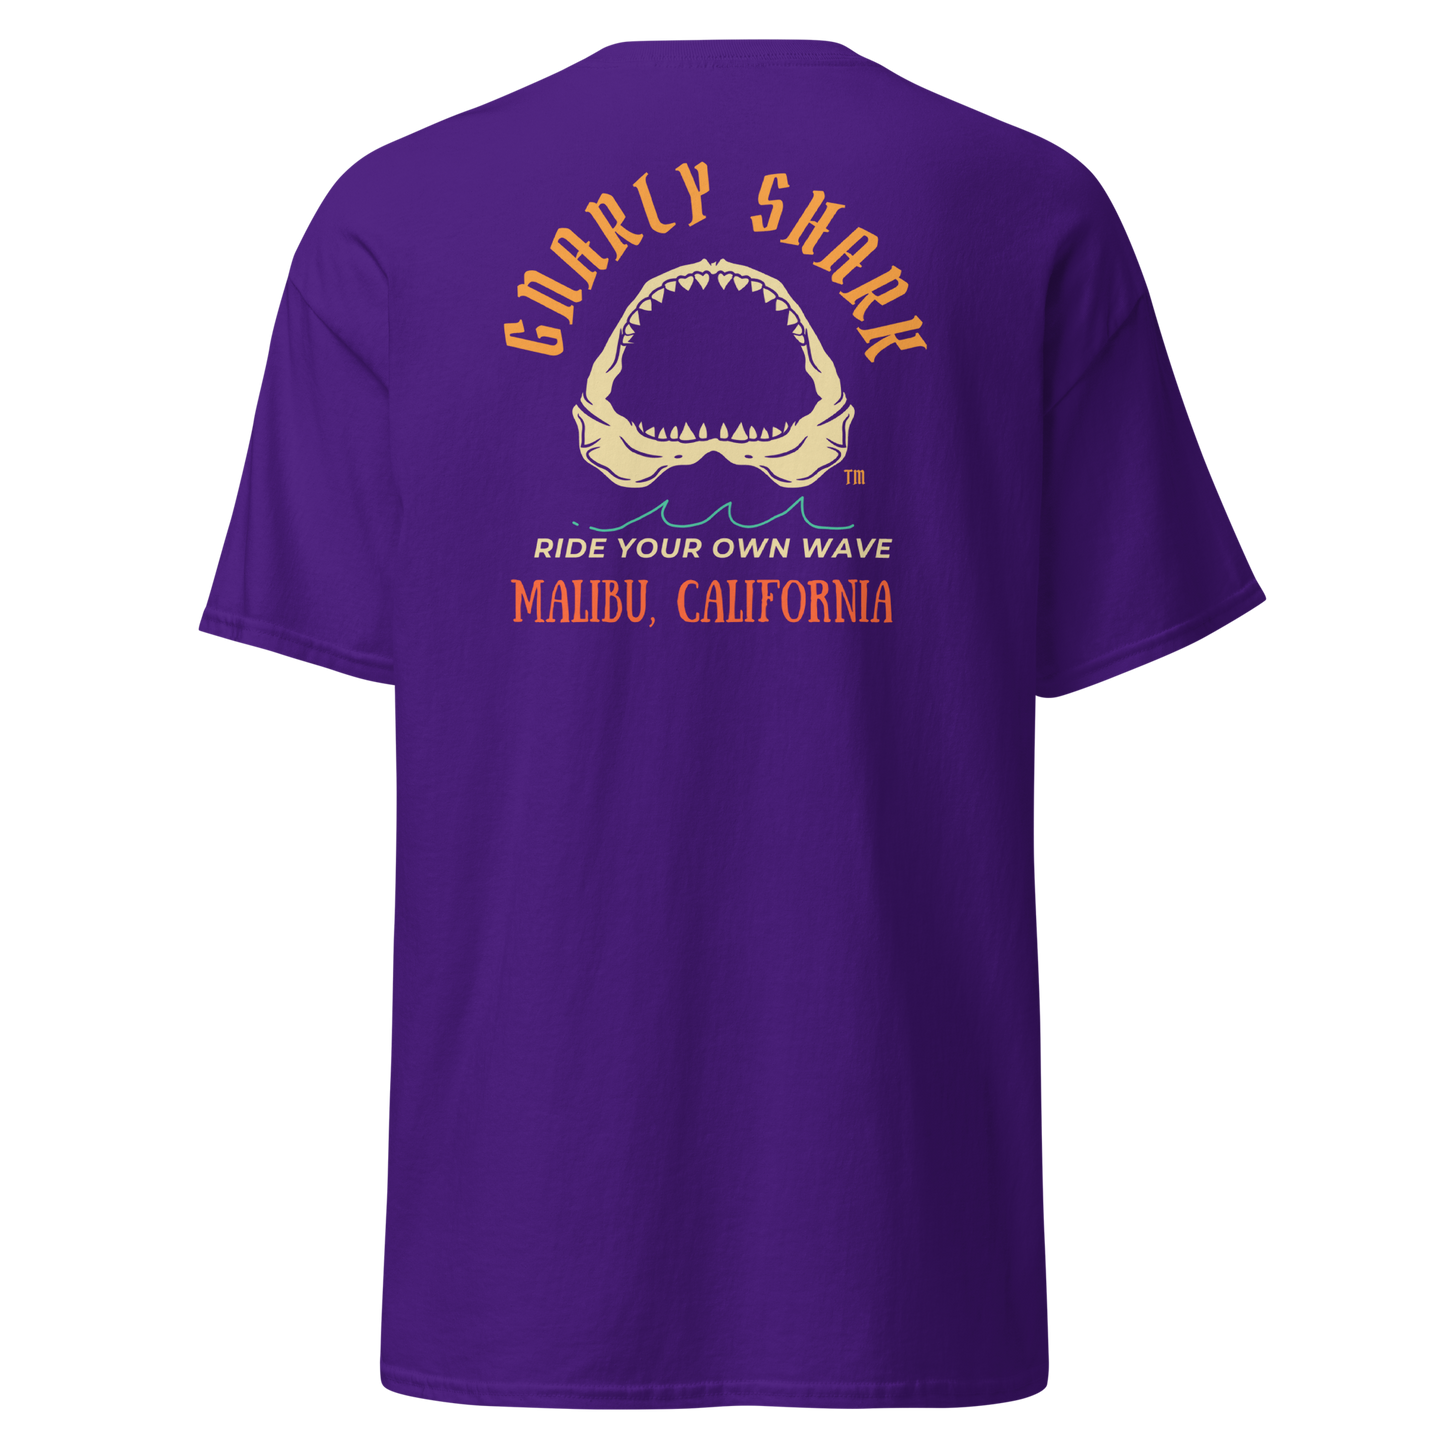 Gnarly Shark Malibu California T-Shirt - Front / Back - Gildan classic 5000